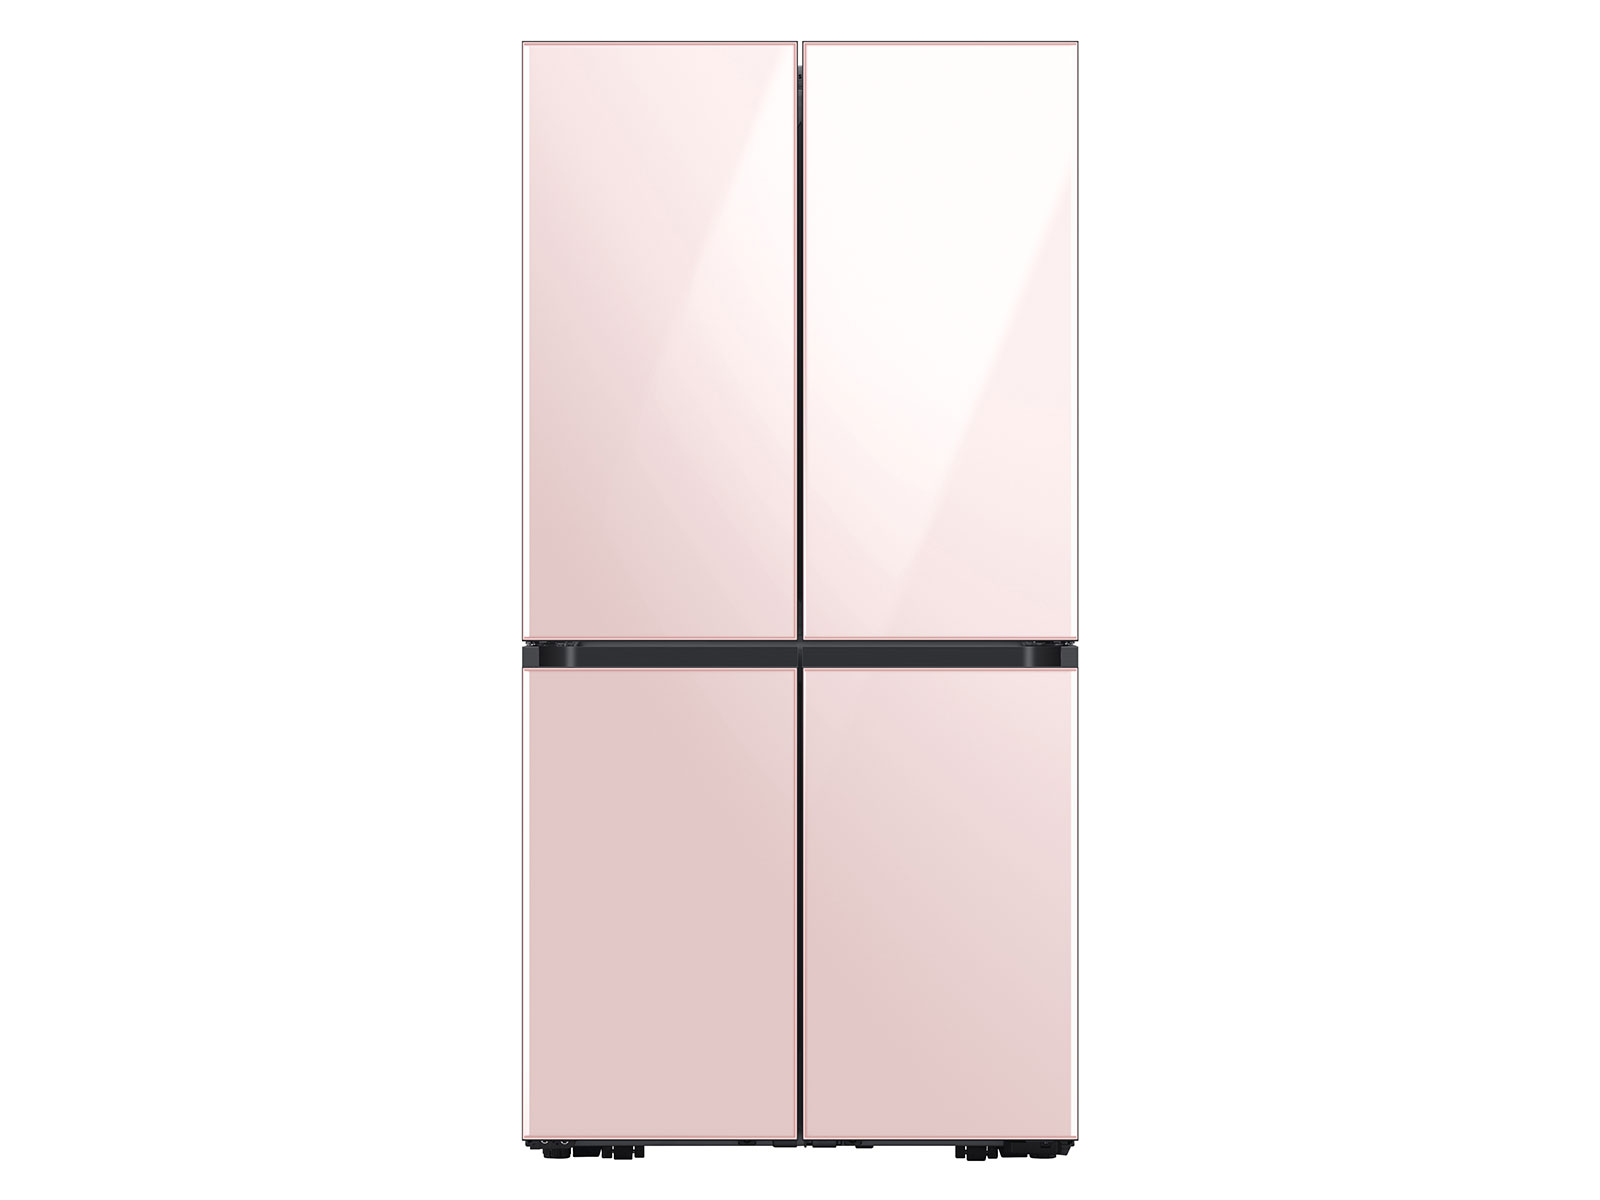 RF29A967541 by Samsung - Bespoke 4-Door Flex™ Refrigerator (29 cu. ft.) in  Navy Glass